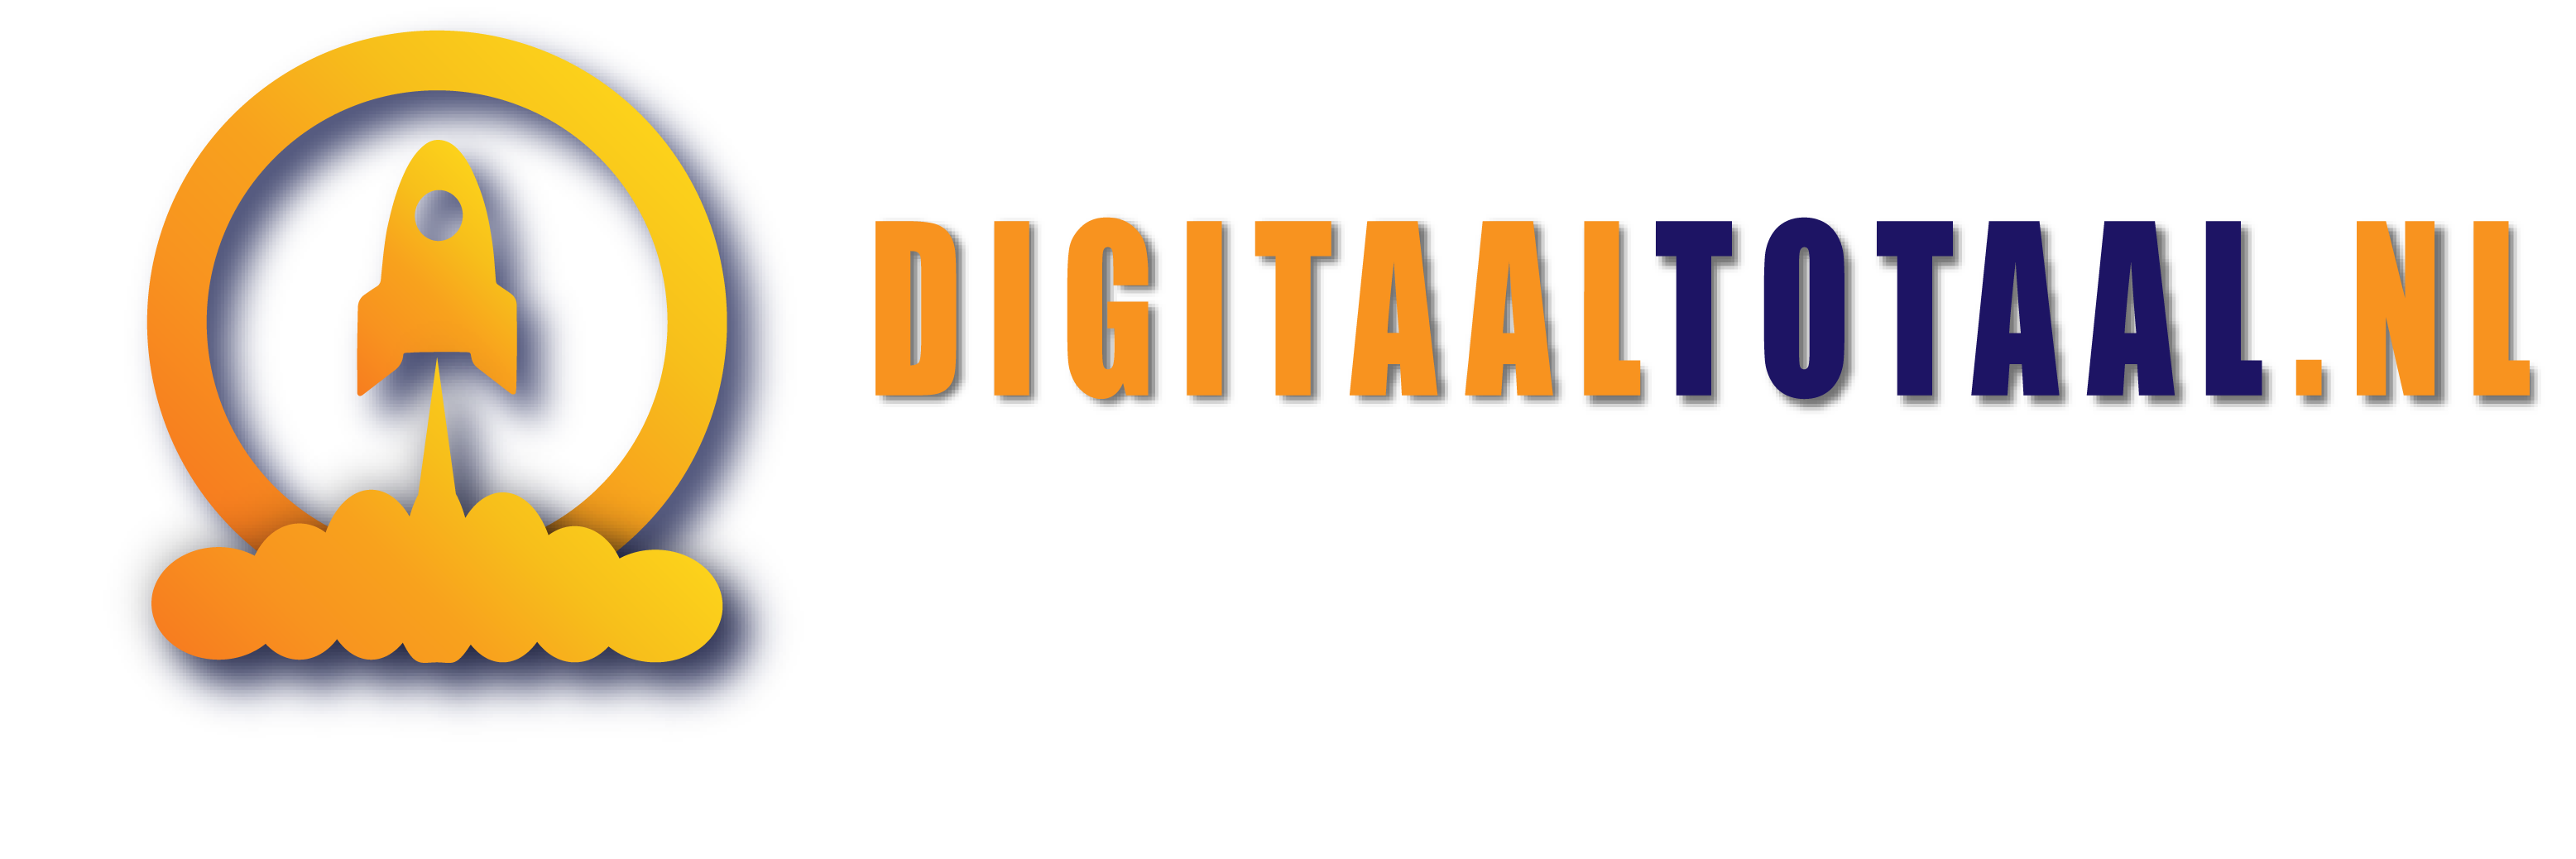 DigitaalTotaal.nl